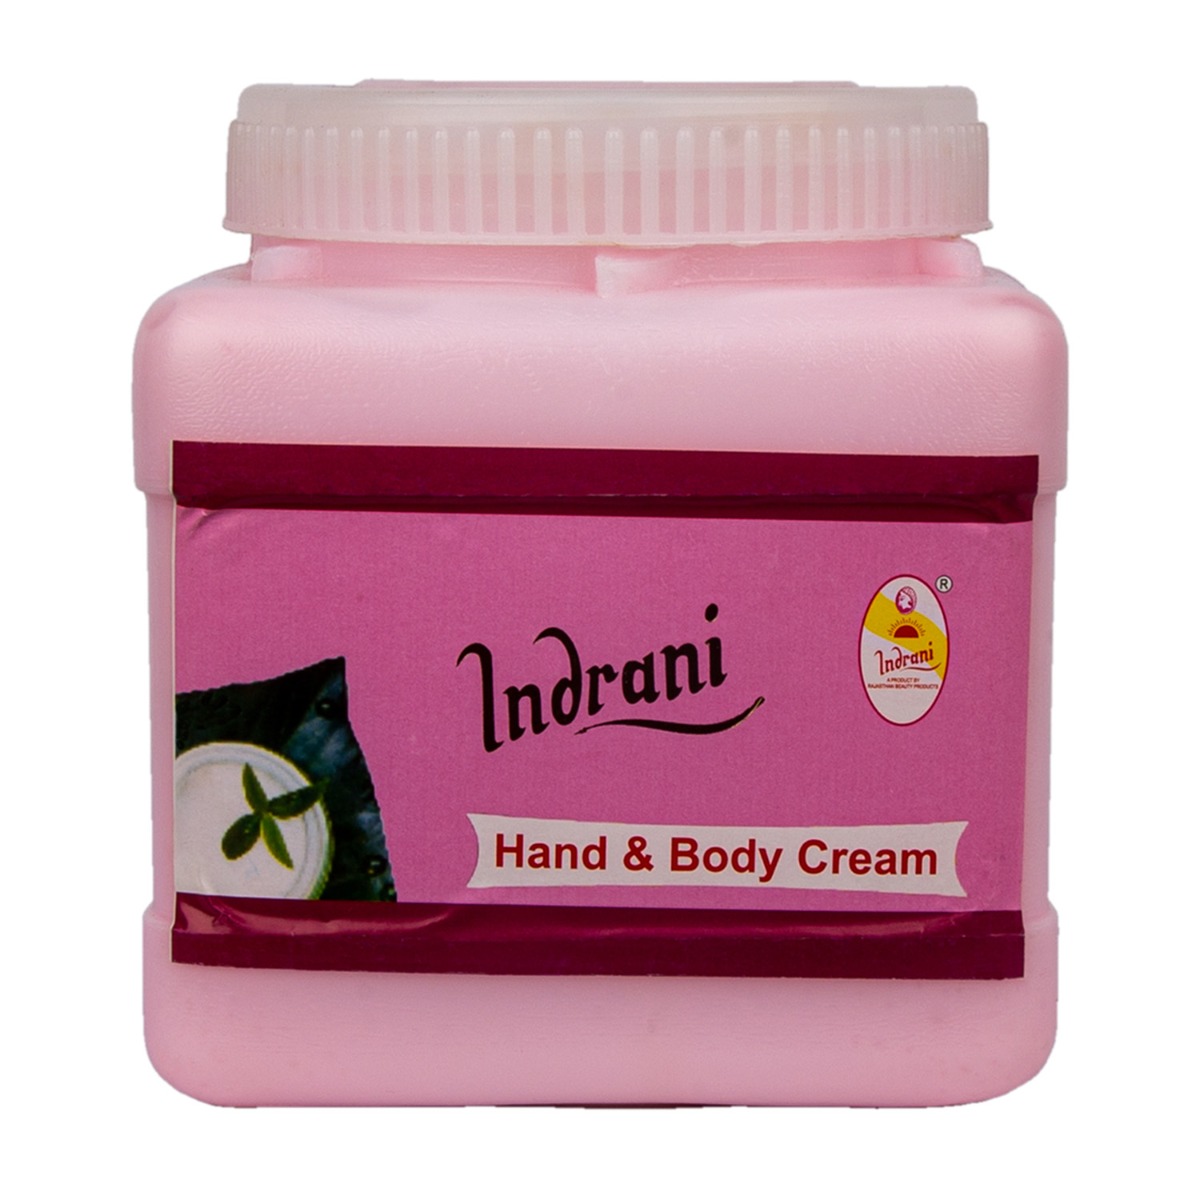 Indrani Hand And Body Cream, 1ltr